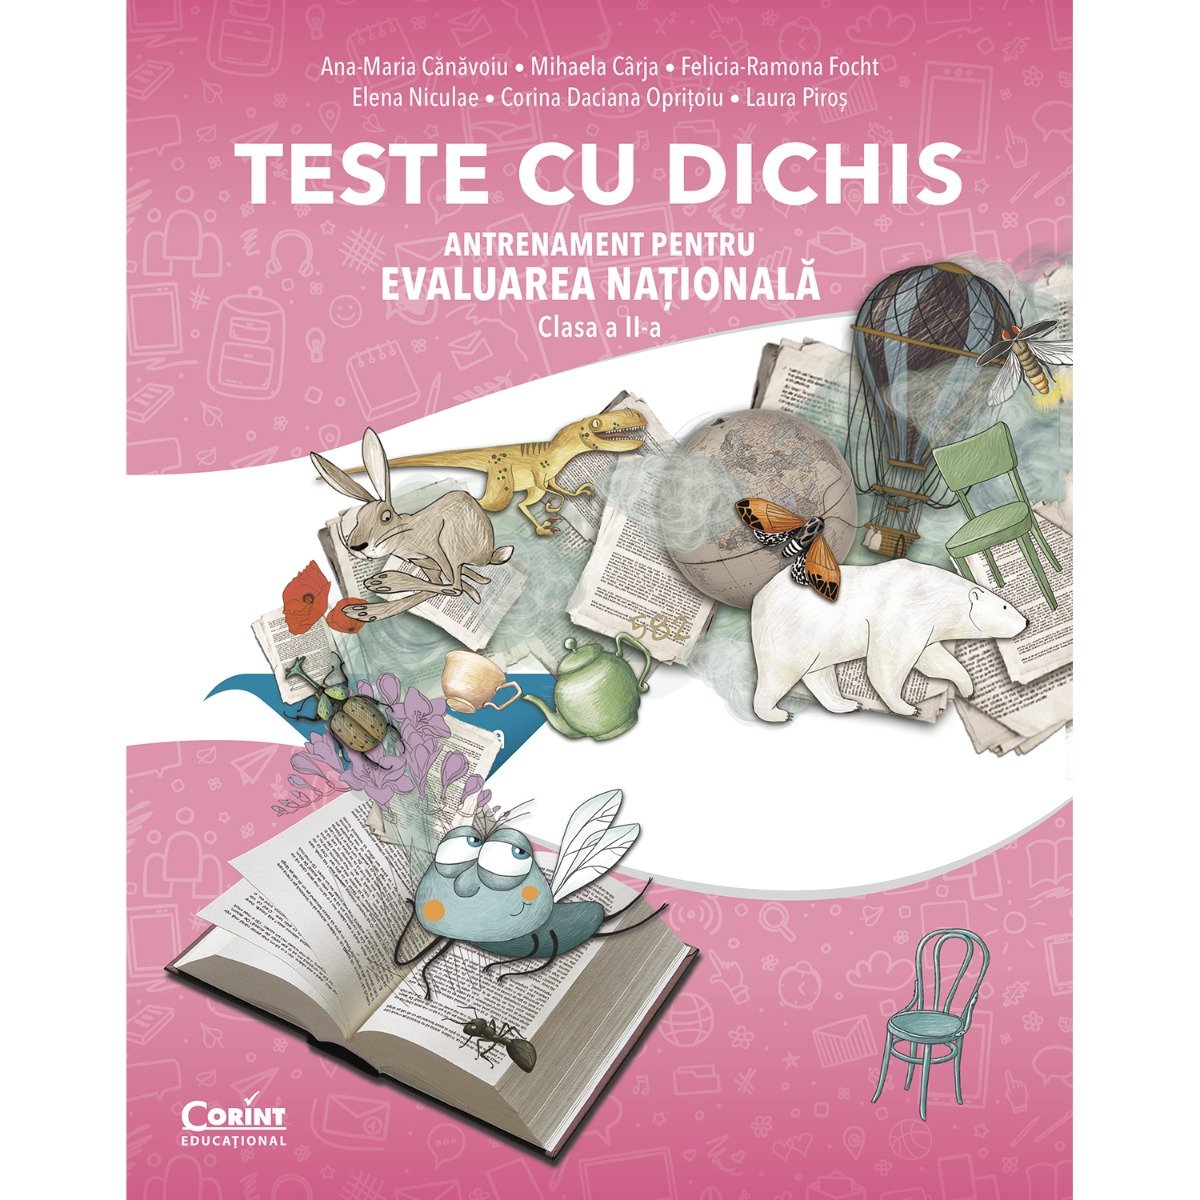 Teste cu dichis, Antrenament pentru evaluarea nationala, Clasa a II-a, Ana-Maria Canavoiu